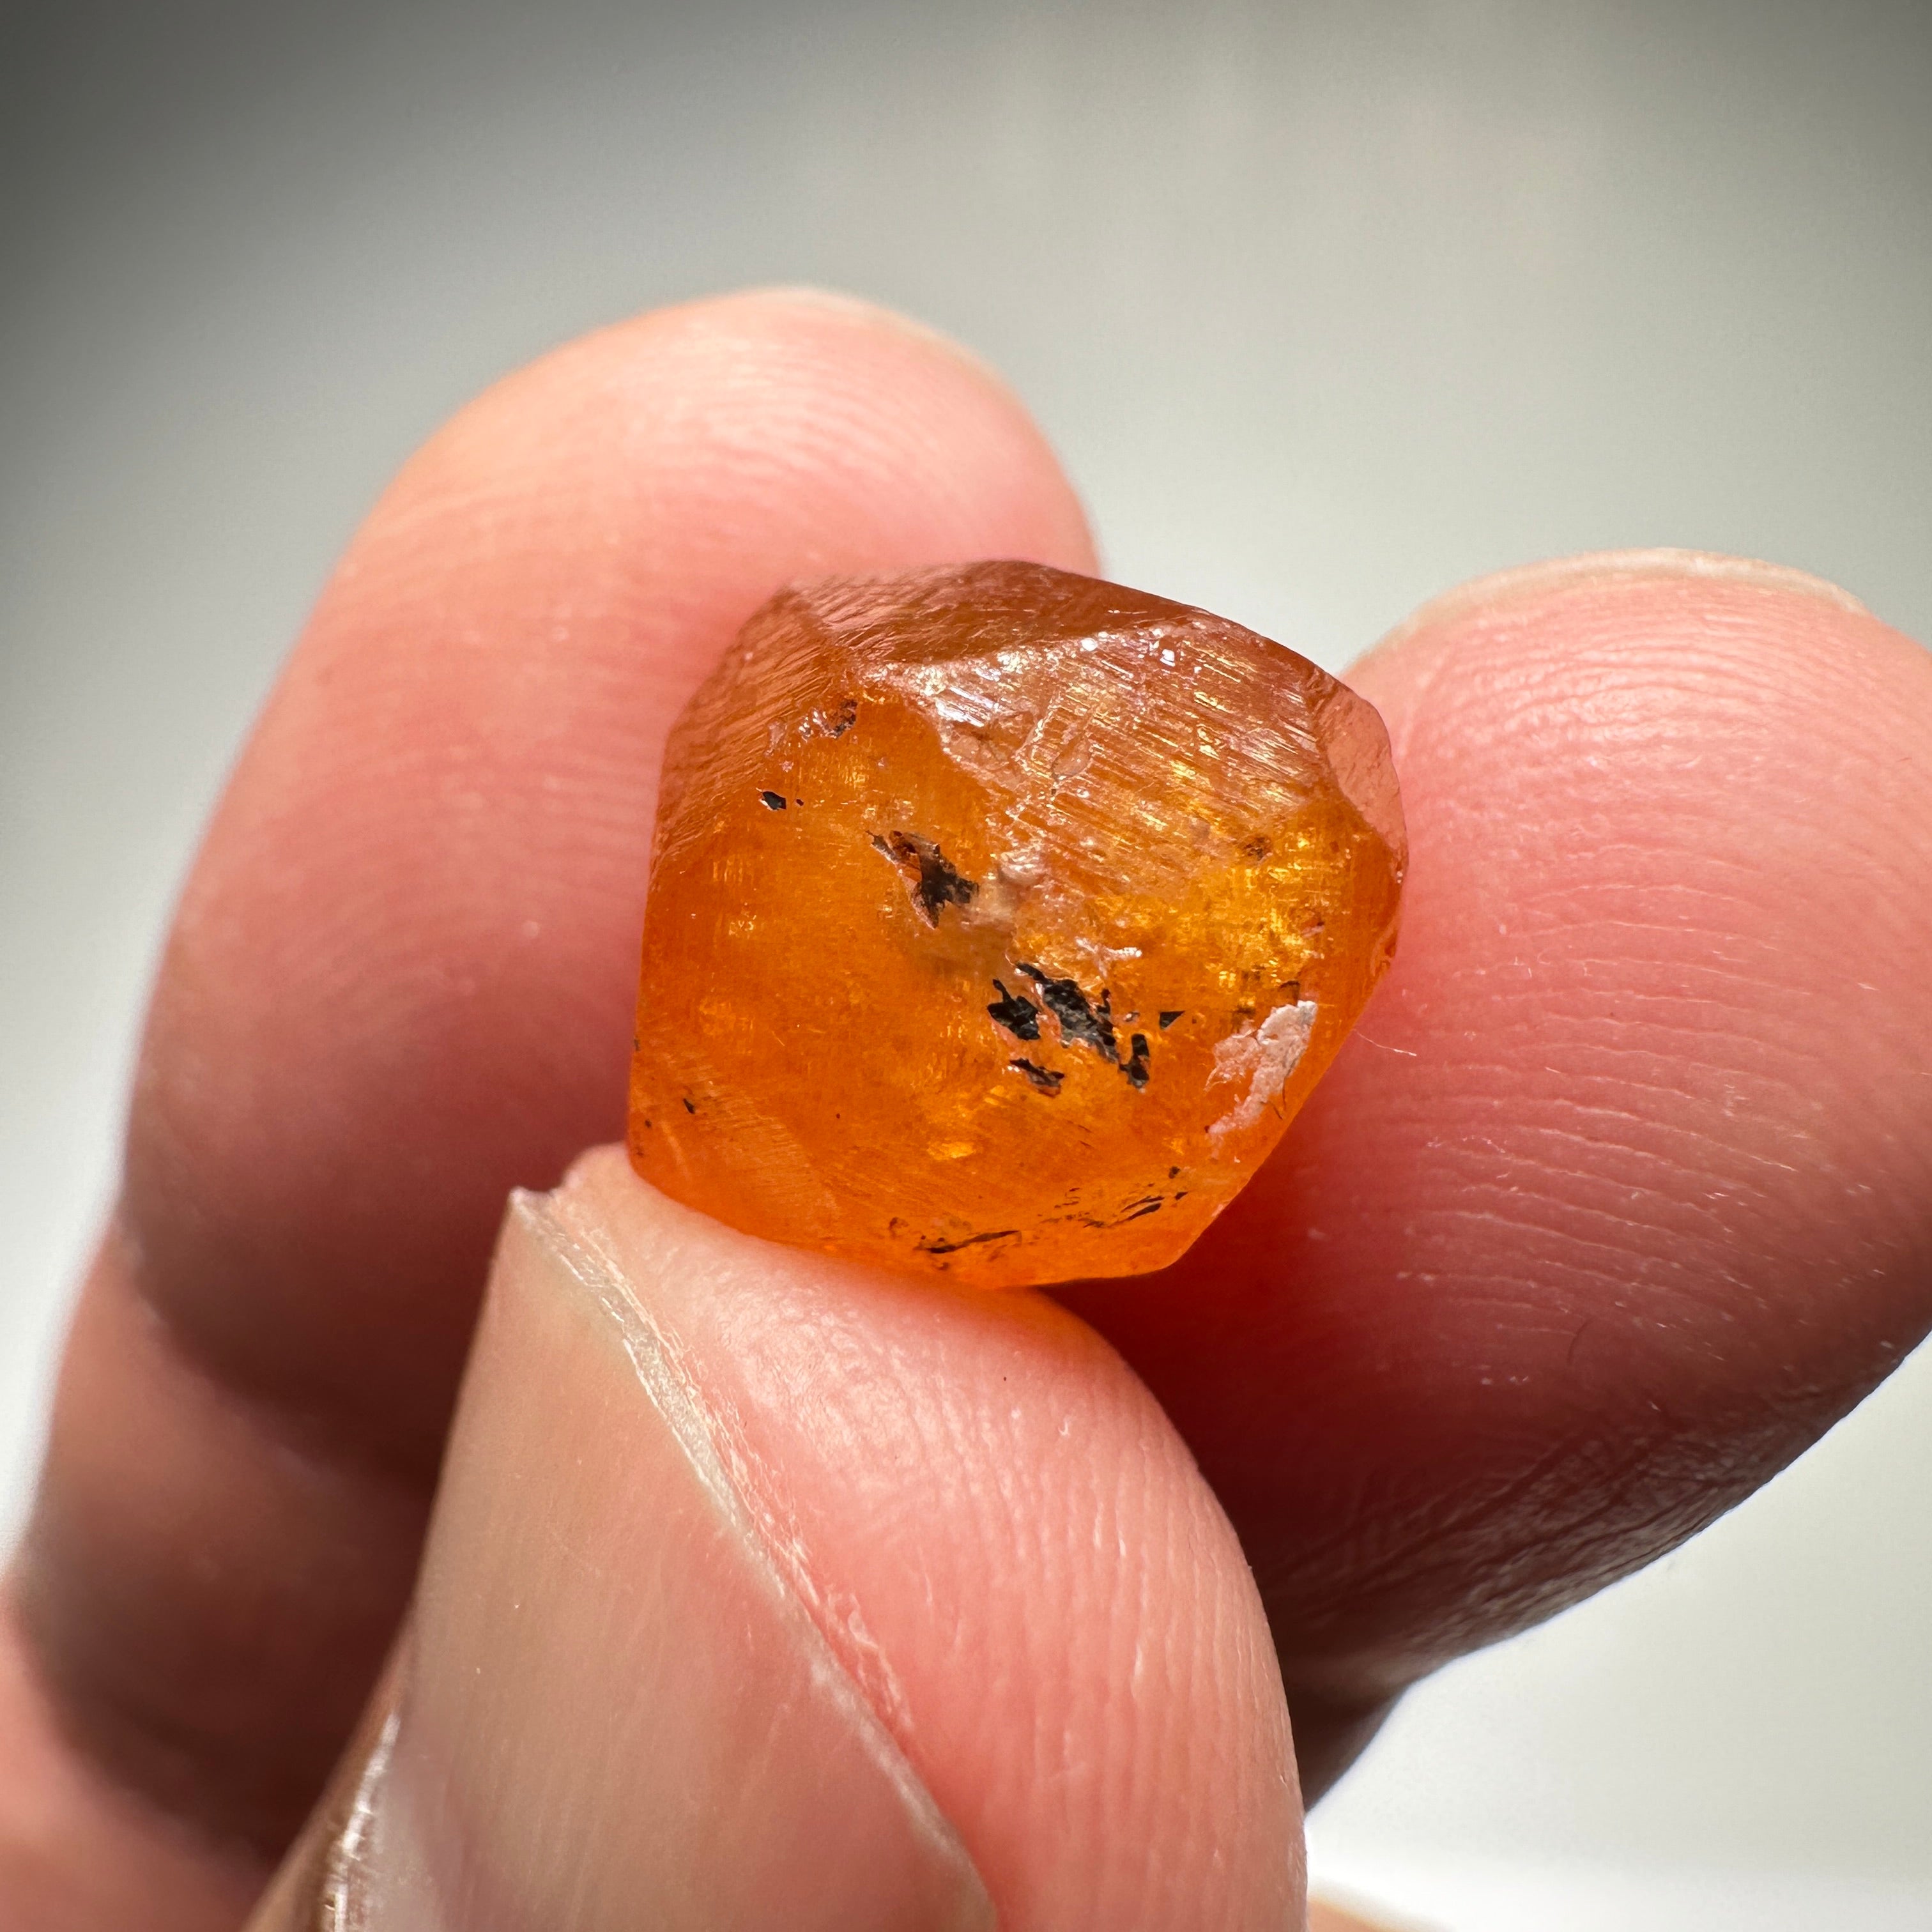 16.50ct / 3.3gm Spessartite Garnet Crystal, Loliondo, Tanzania. 10.5 x 10 x 10mm, Untreated Unheated